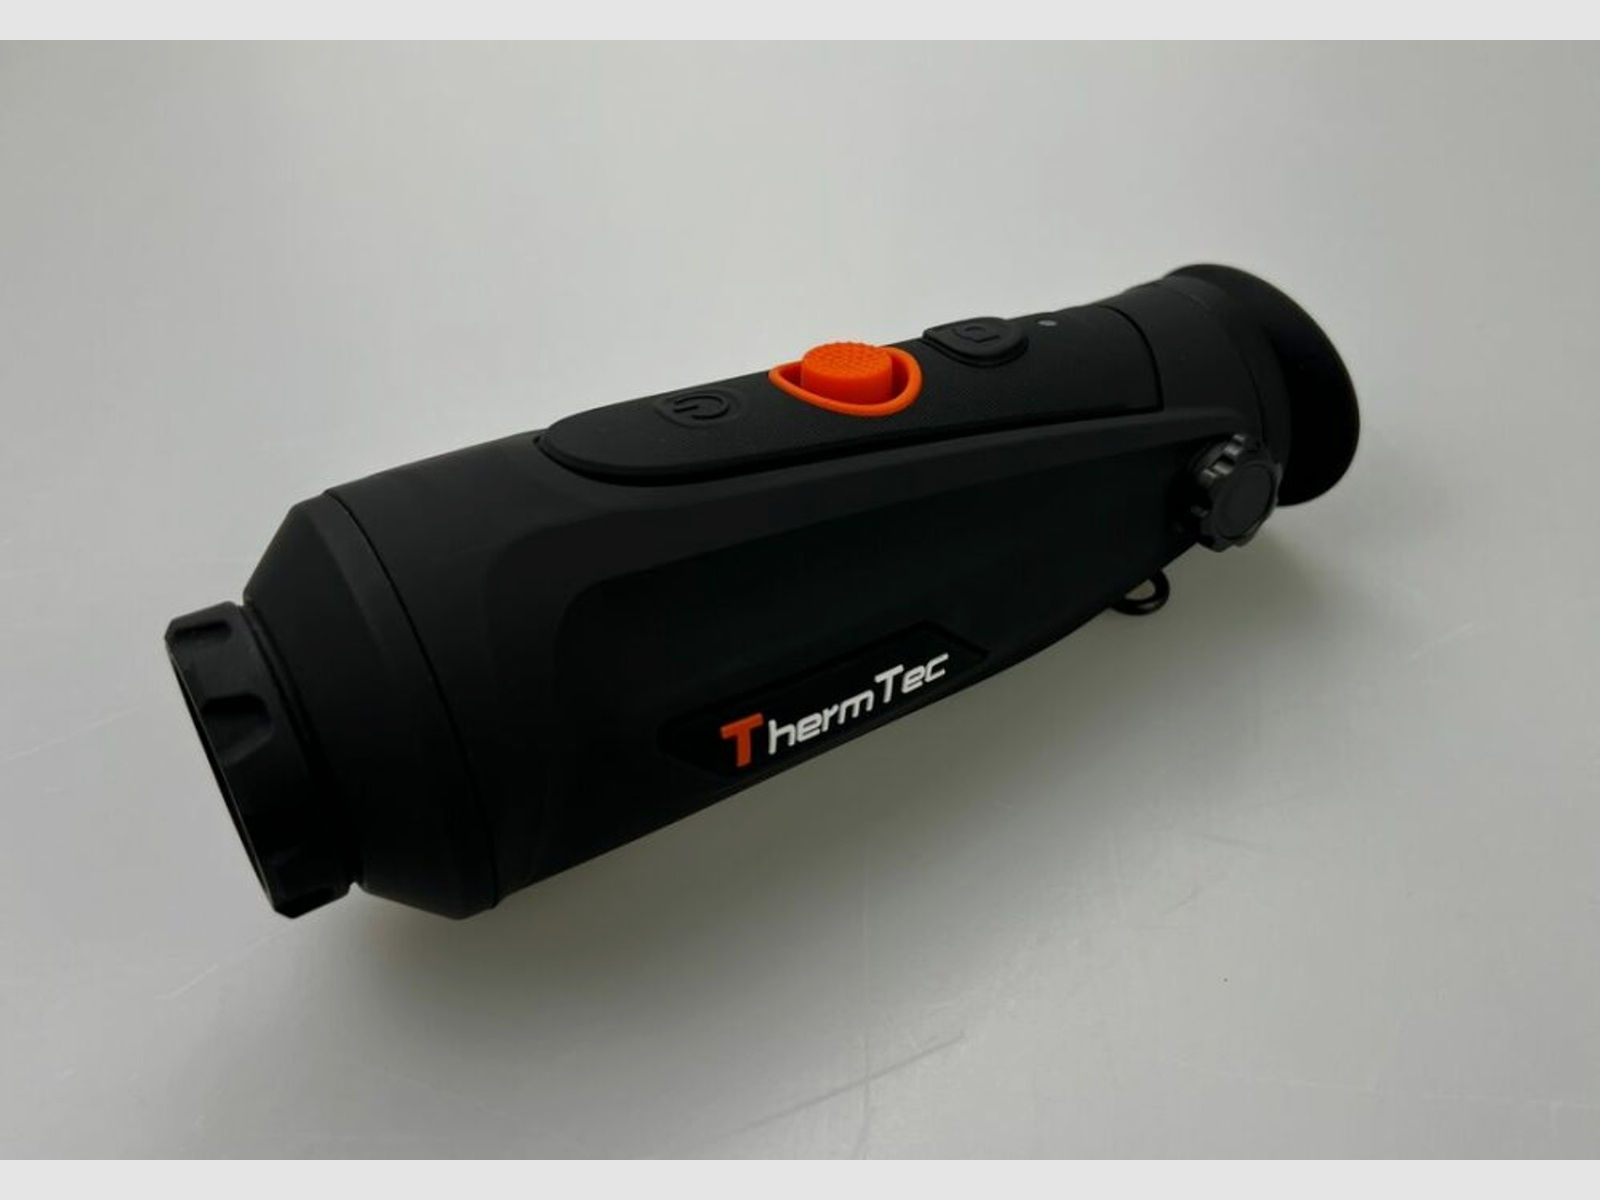 ThermTec	 Cyclops 319 Pro